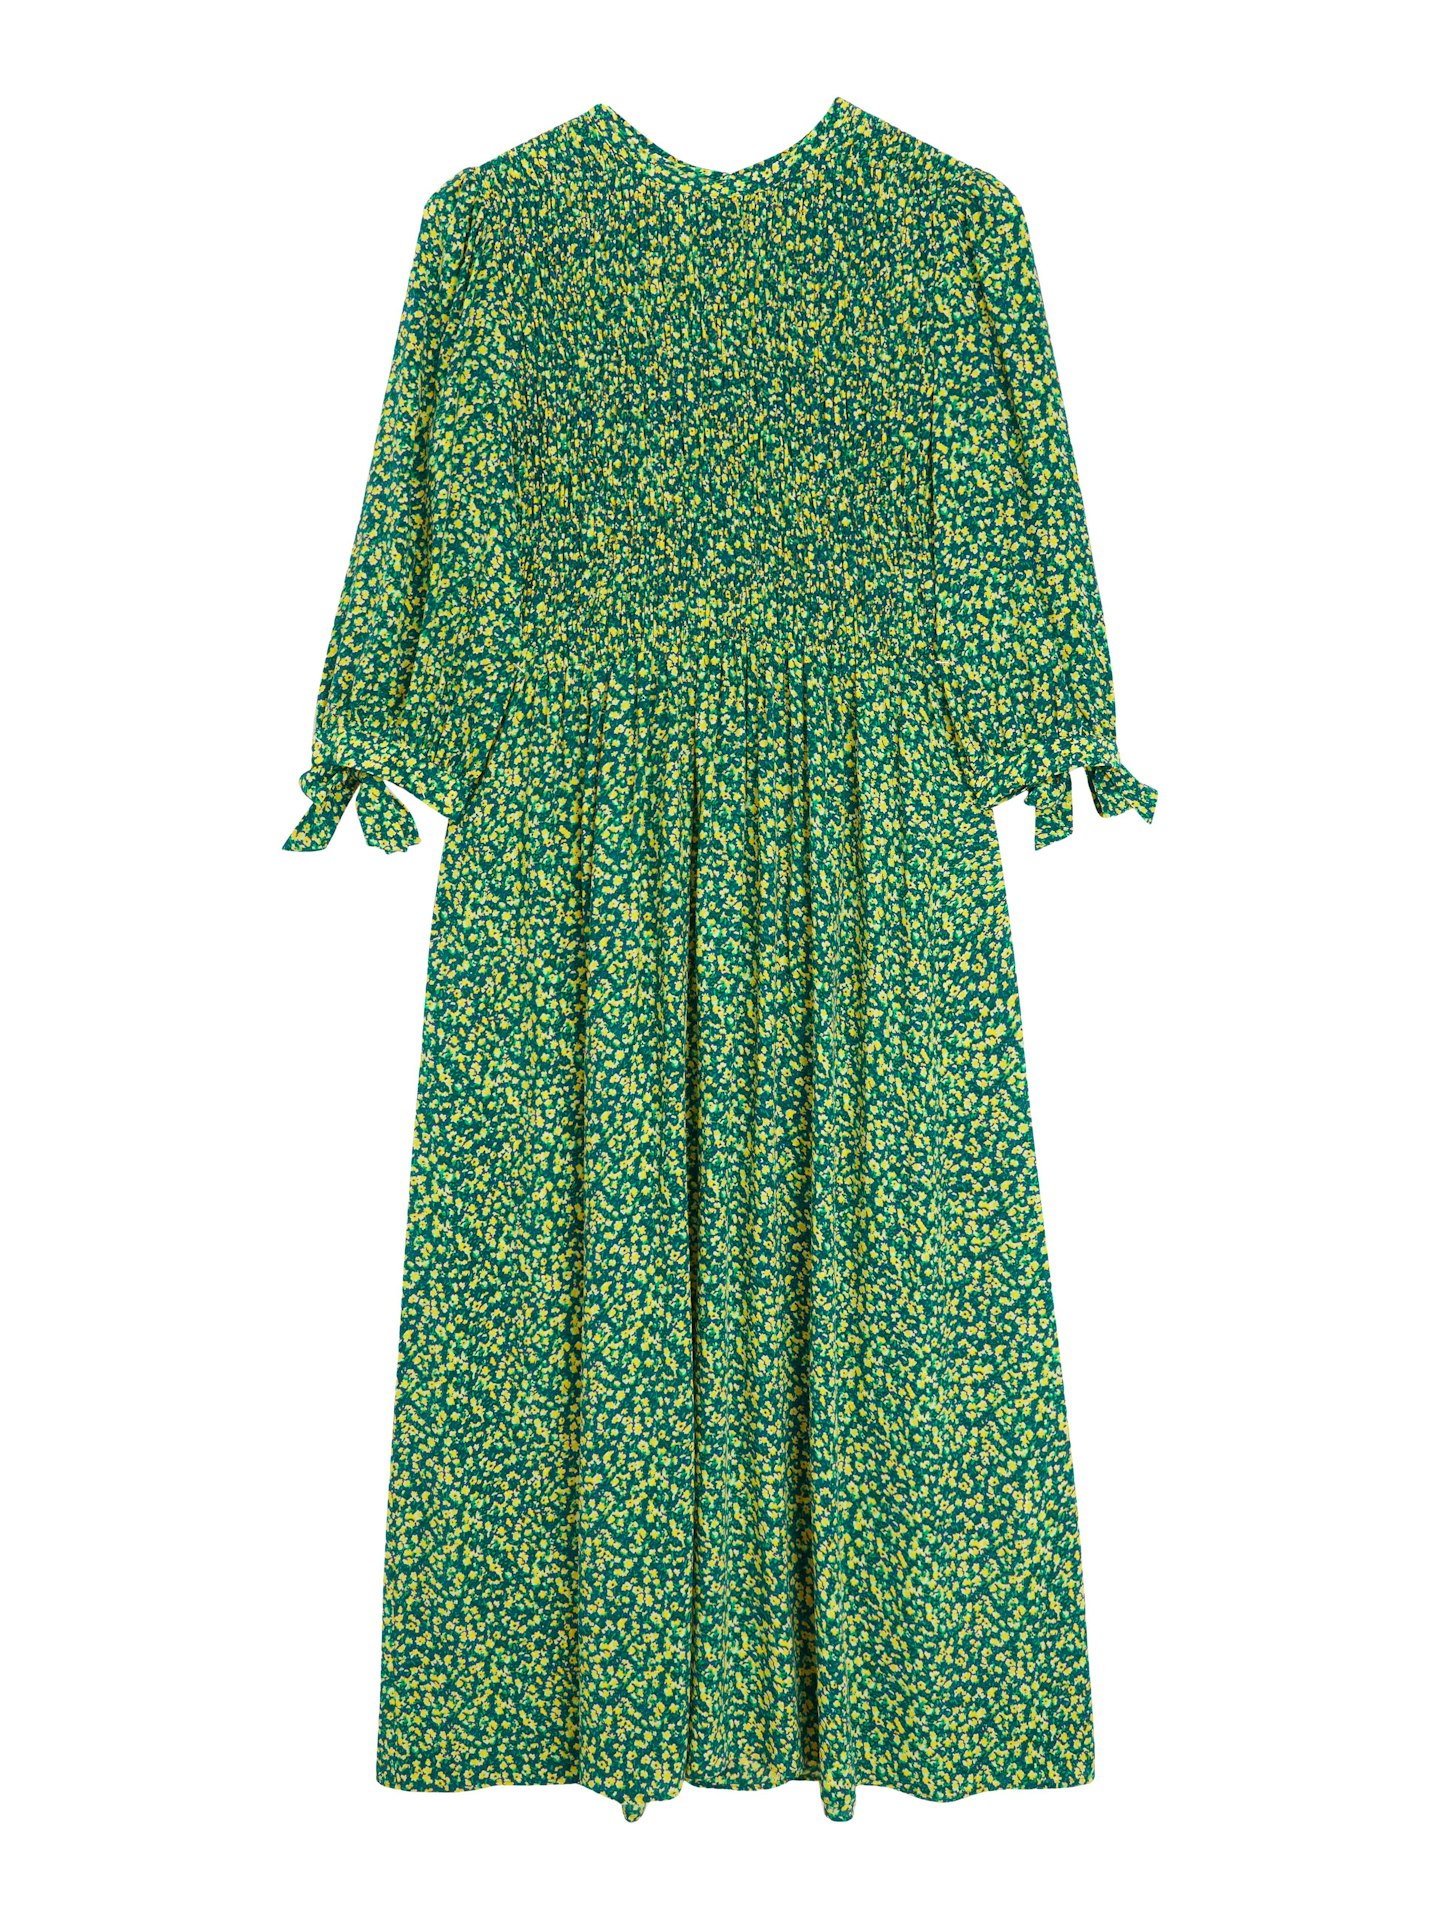 Whistles, Ditsy Sunflower Print Midi Dress, £139